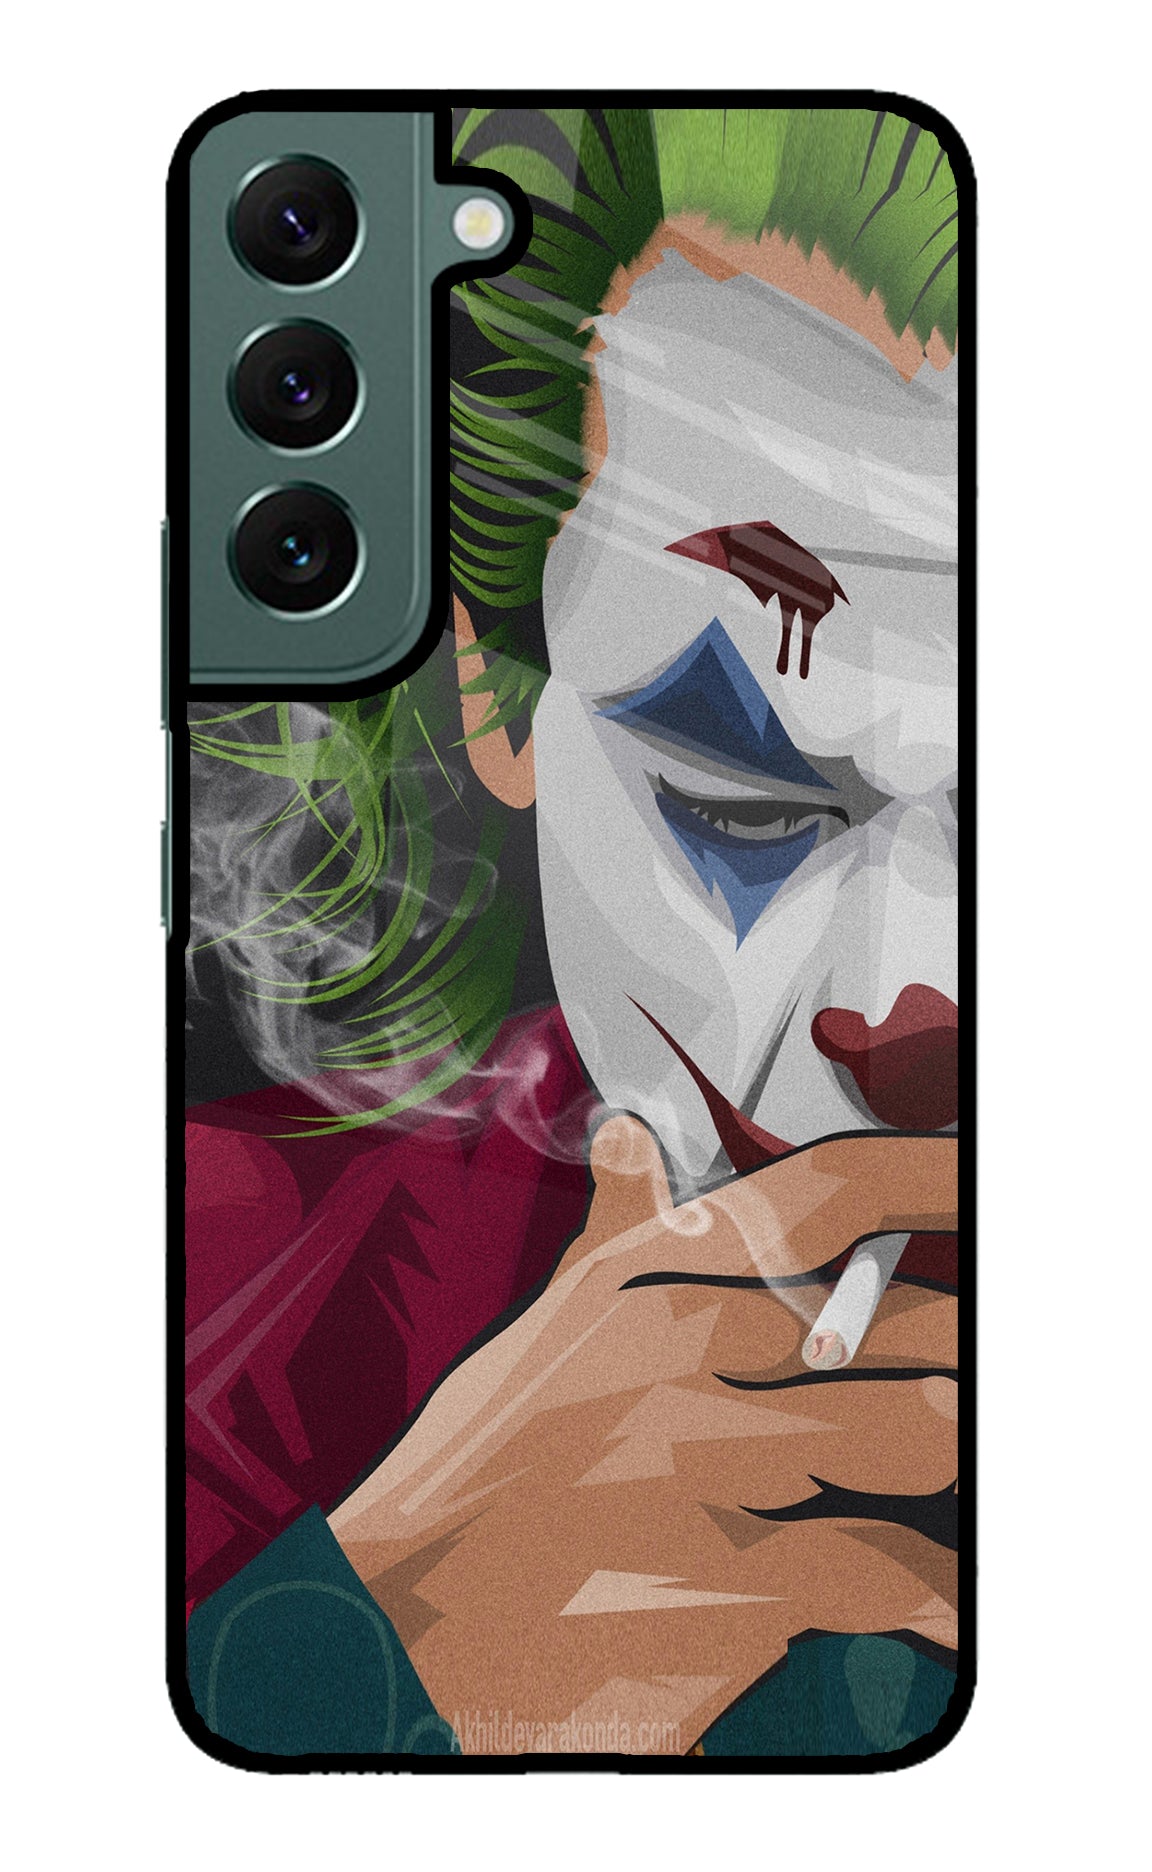 Joker Smoking Samsung S22 Plus Back Cover